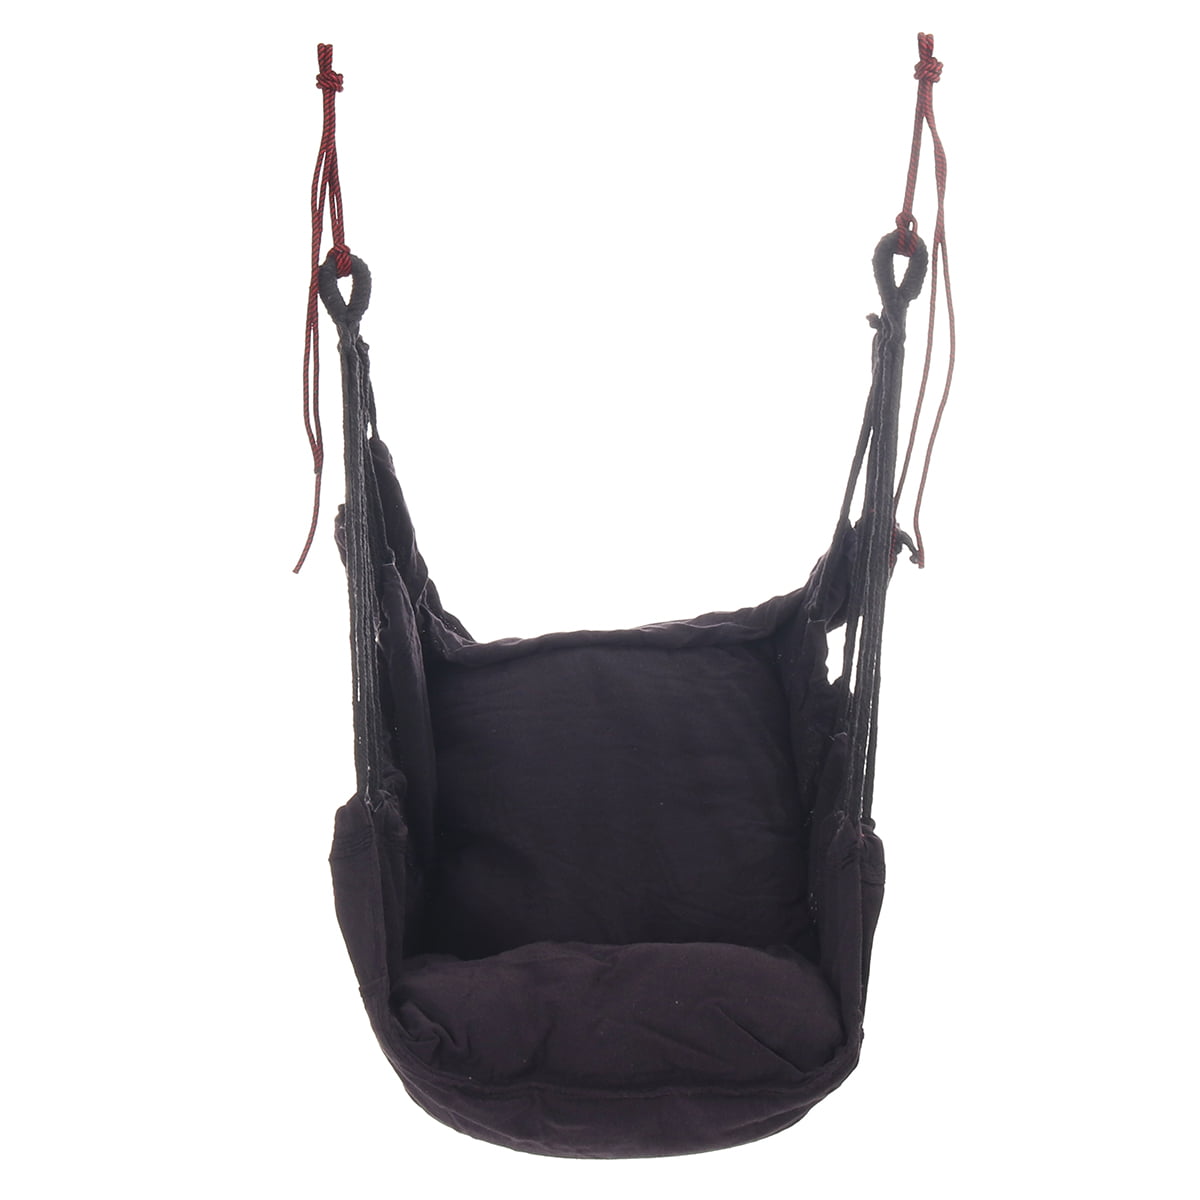 【250KG】Deluxe Macrame Hammock Chair Rope Hanging Garden Yard Swing Seat W/ Bag 